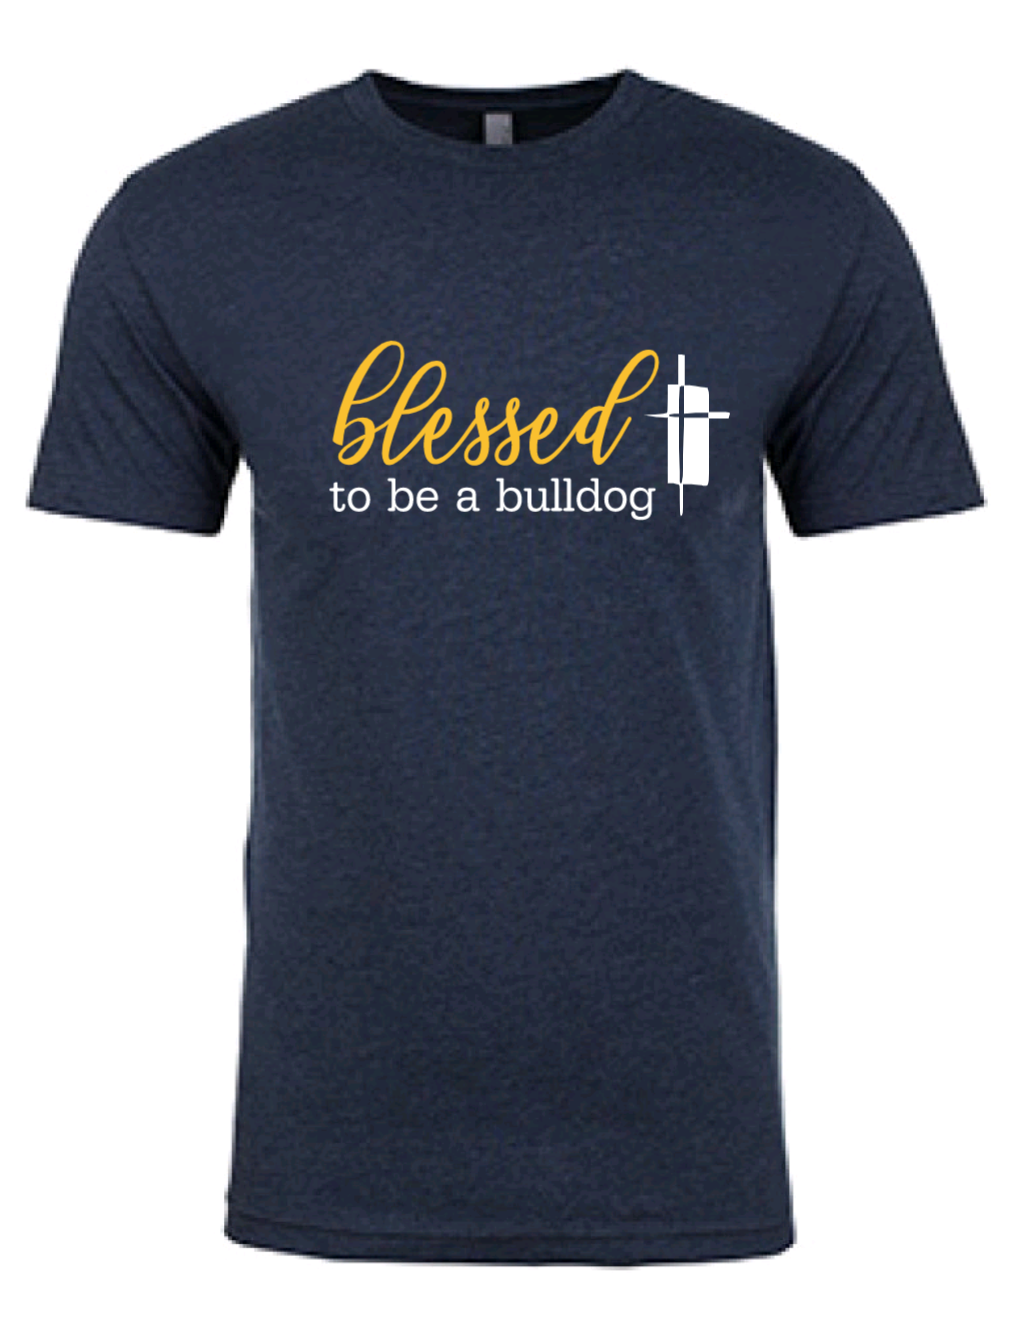 St. John Bosco Blessed to be a Bulldog T-Shirt